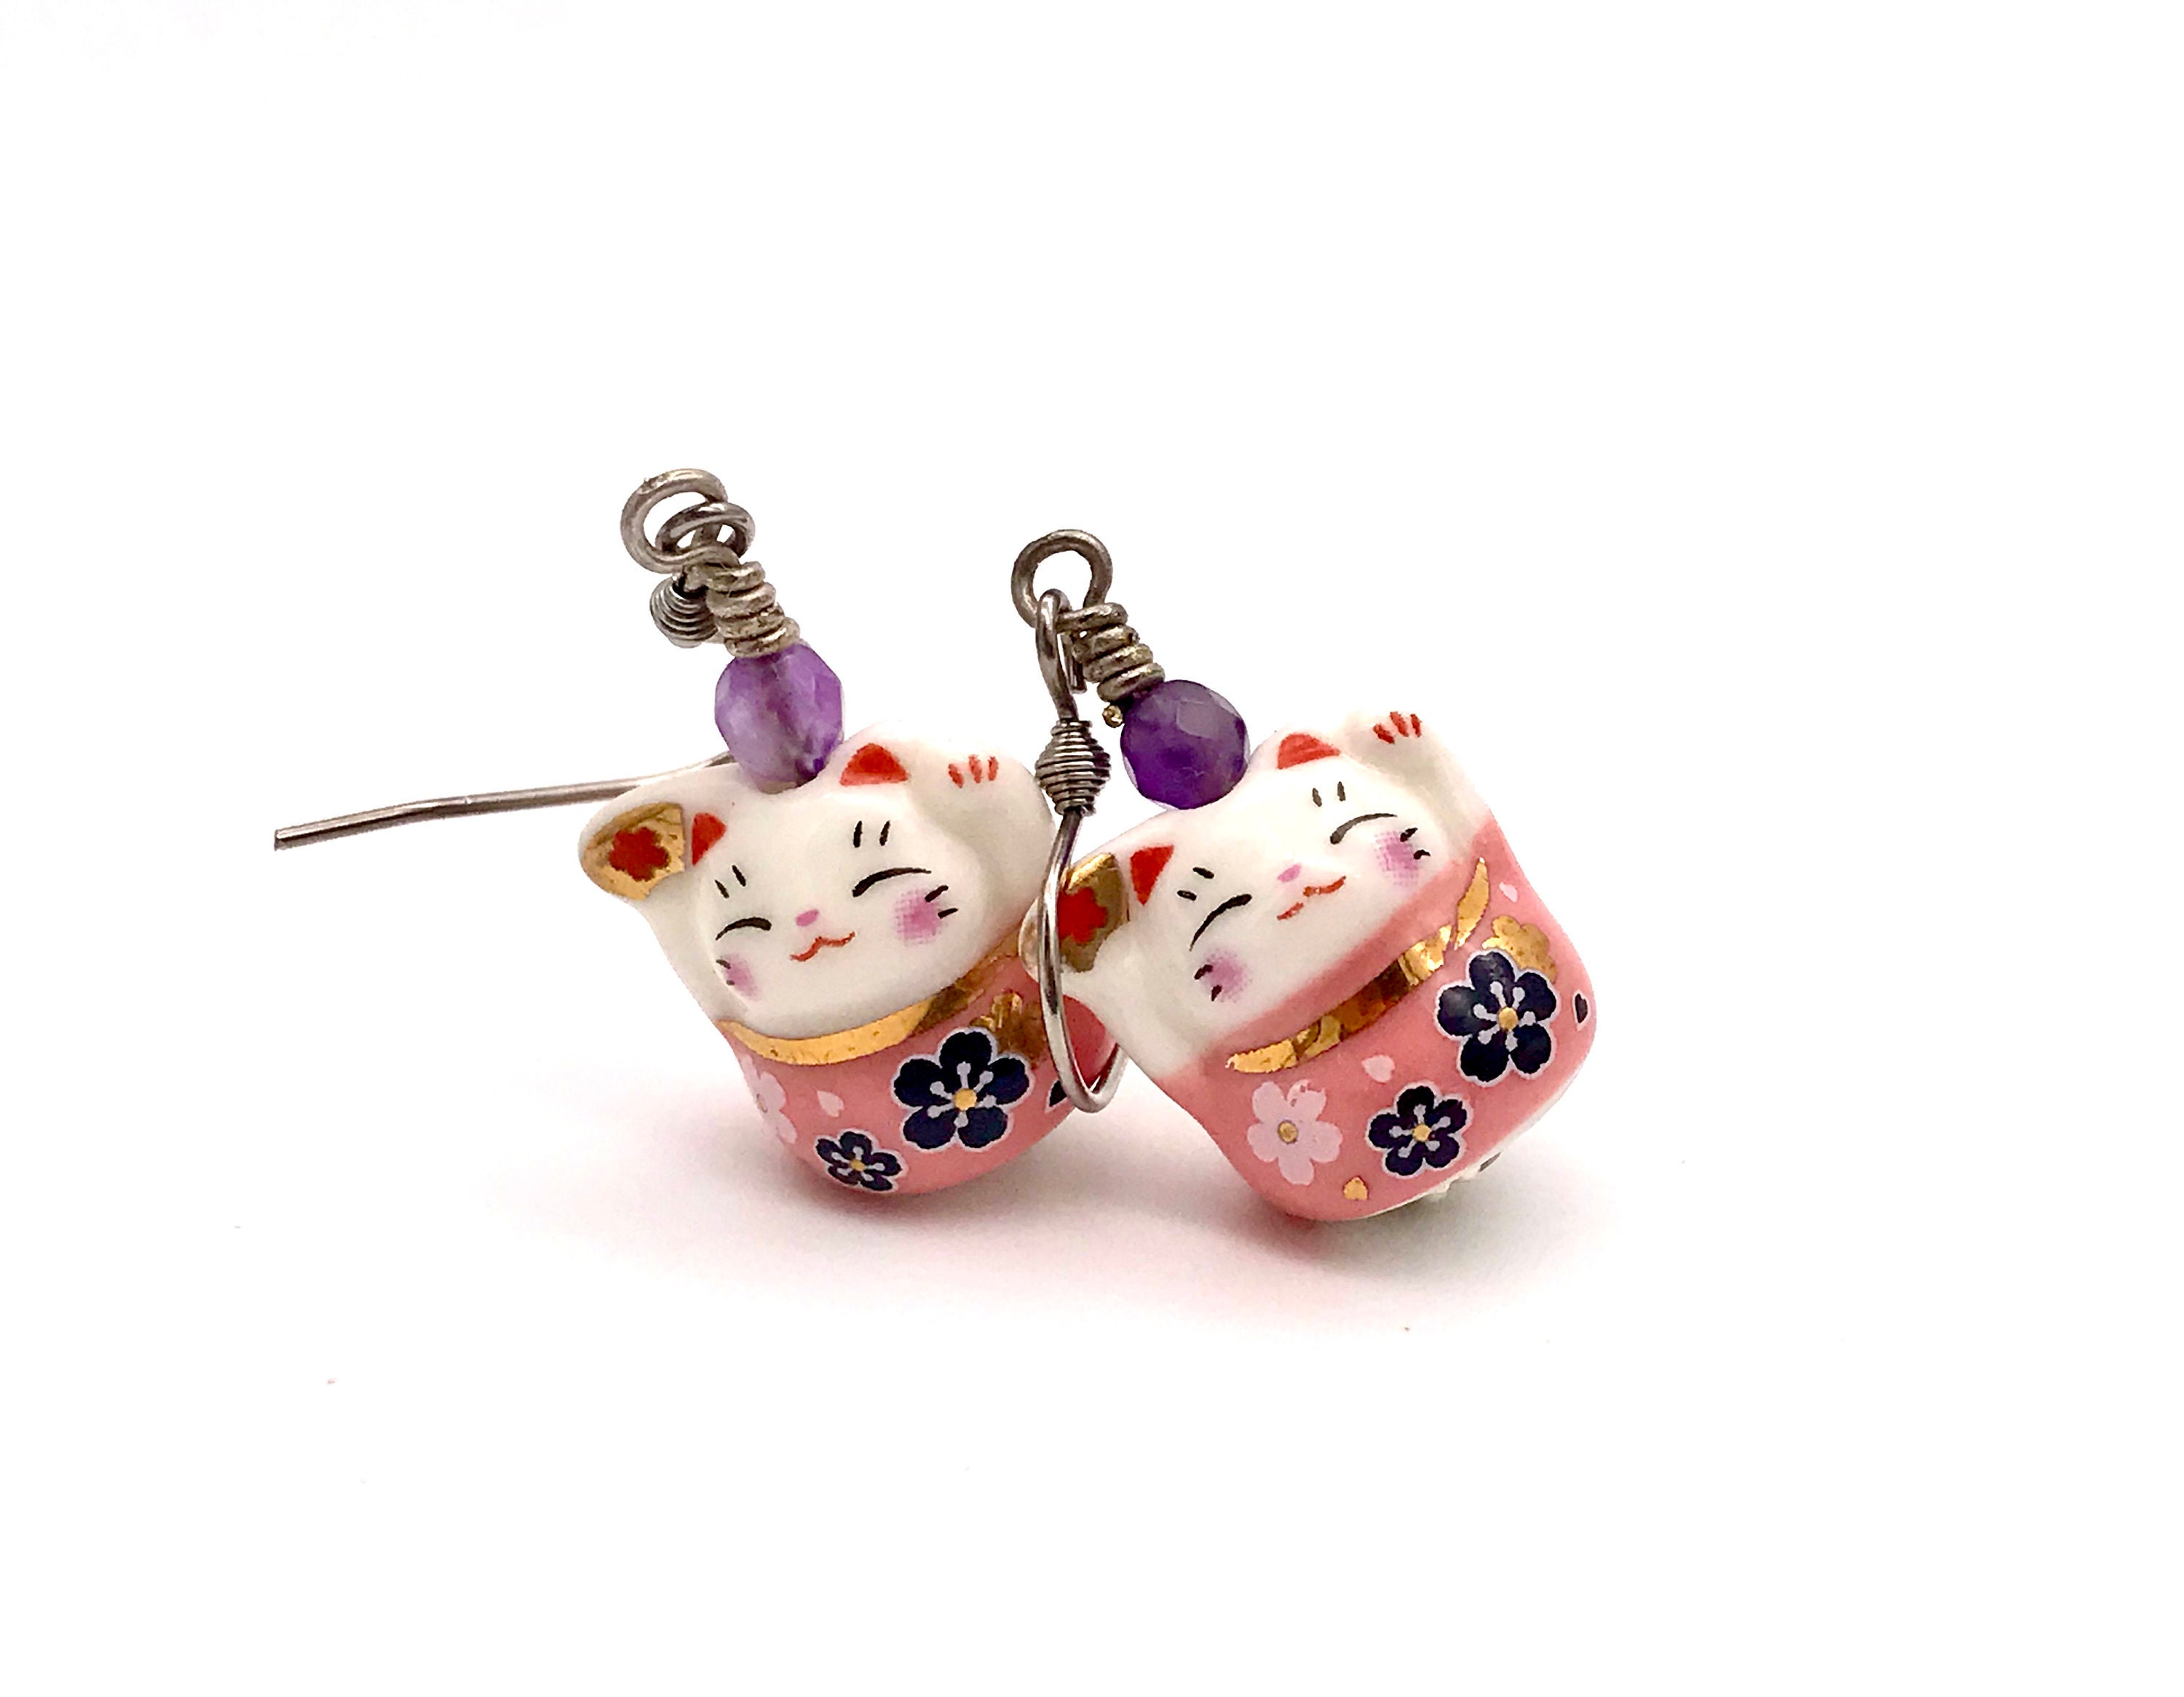 kawaii cat earrings pink maneki neko porcelain dangle earrings lucky cat ceramic earrings anime cat earrings kimono cat anime earrings